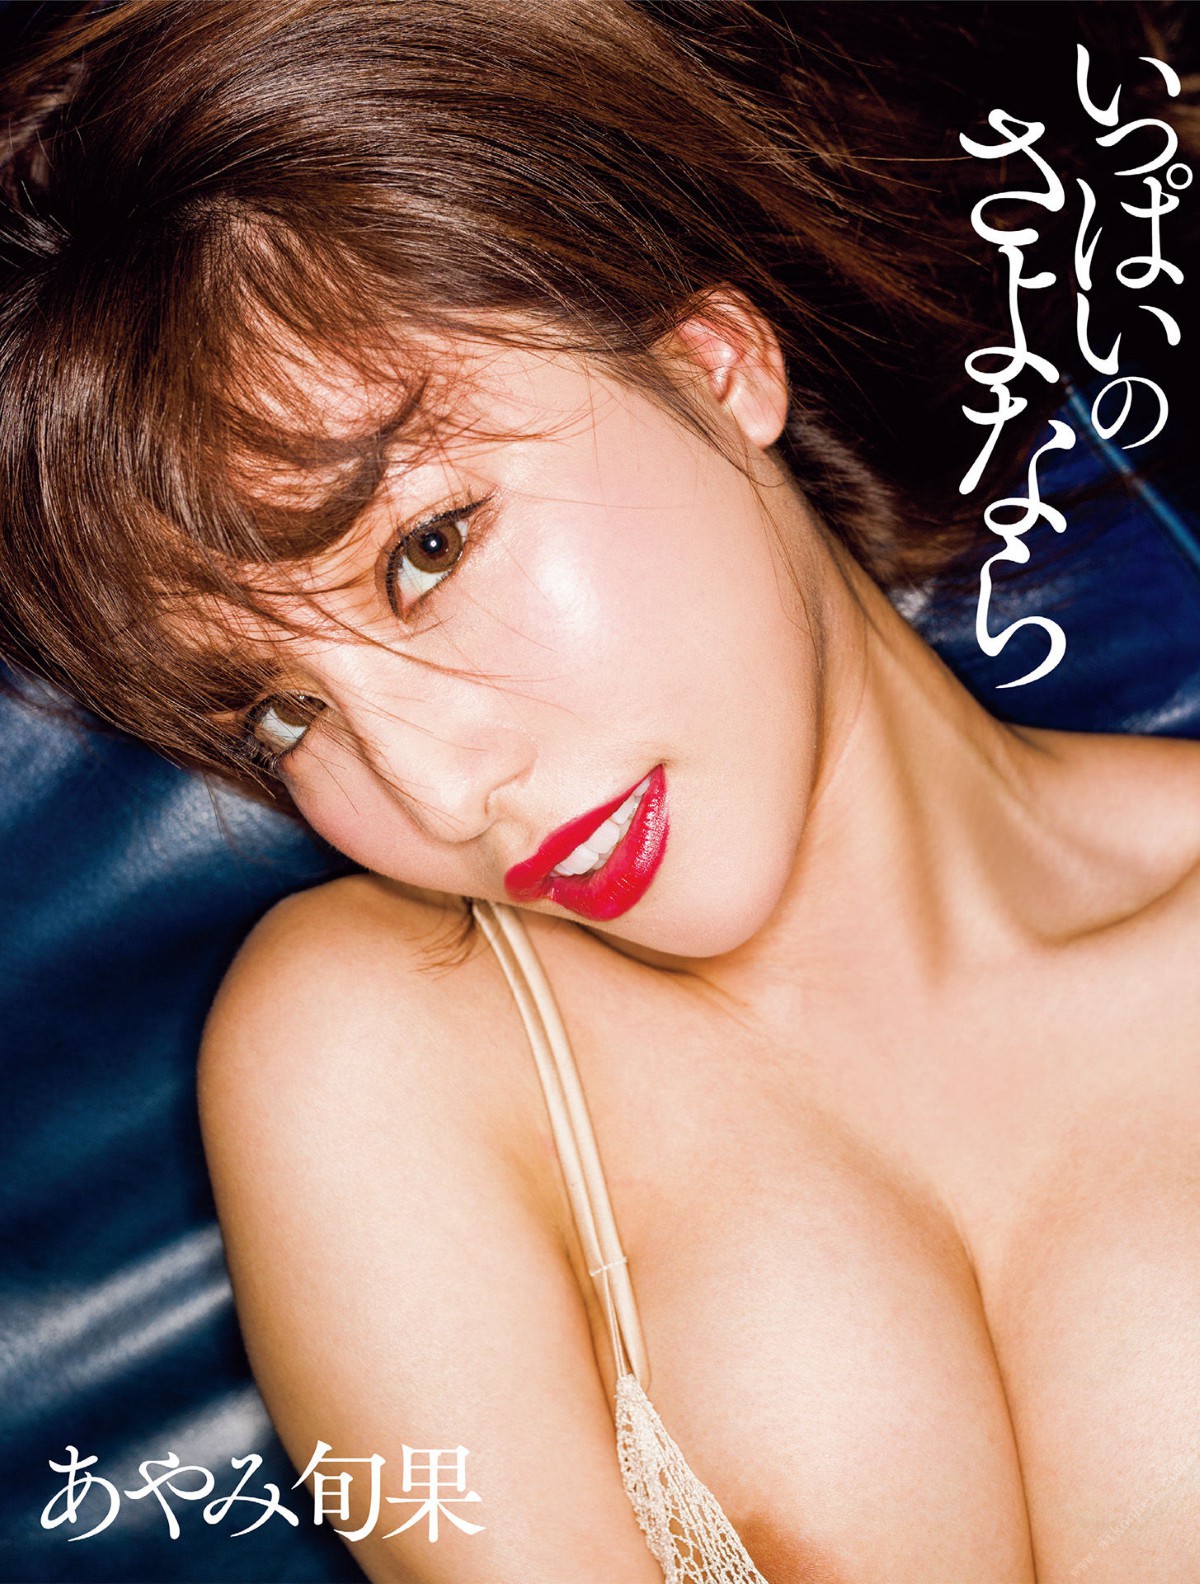 Photobook 2019 02 20 Shunka Ayami あやみ旬果 Asa Geisha Sexy Actress 0064 4257327489.jpg